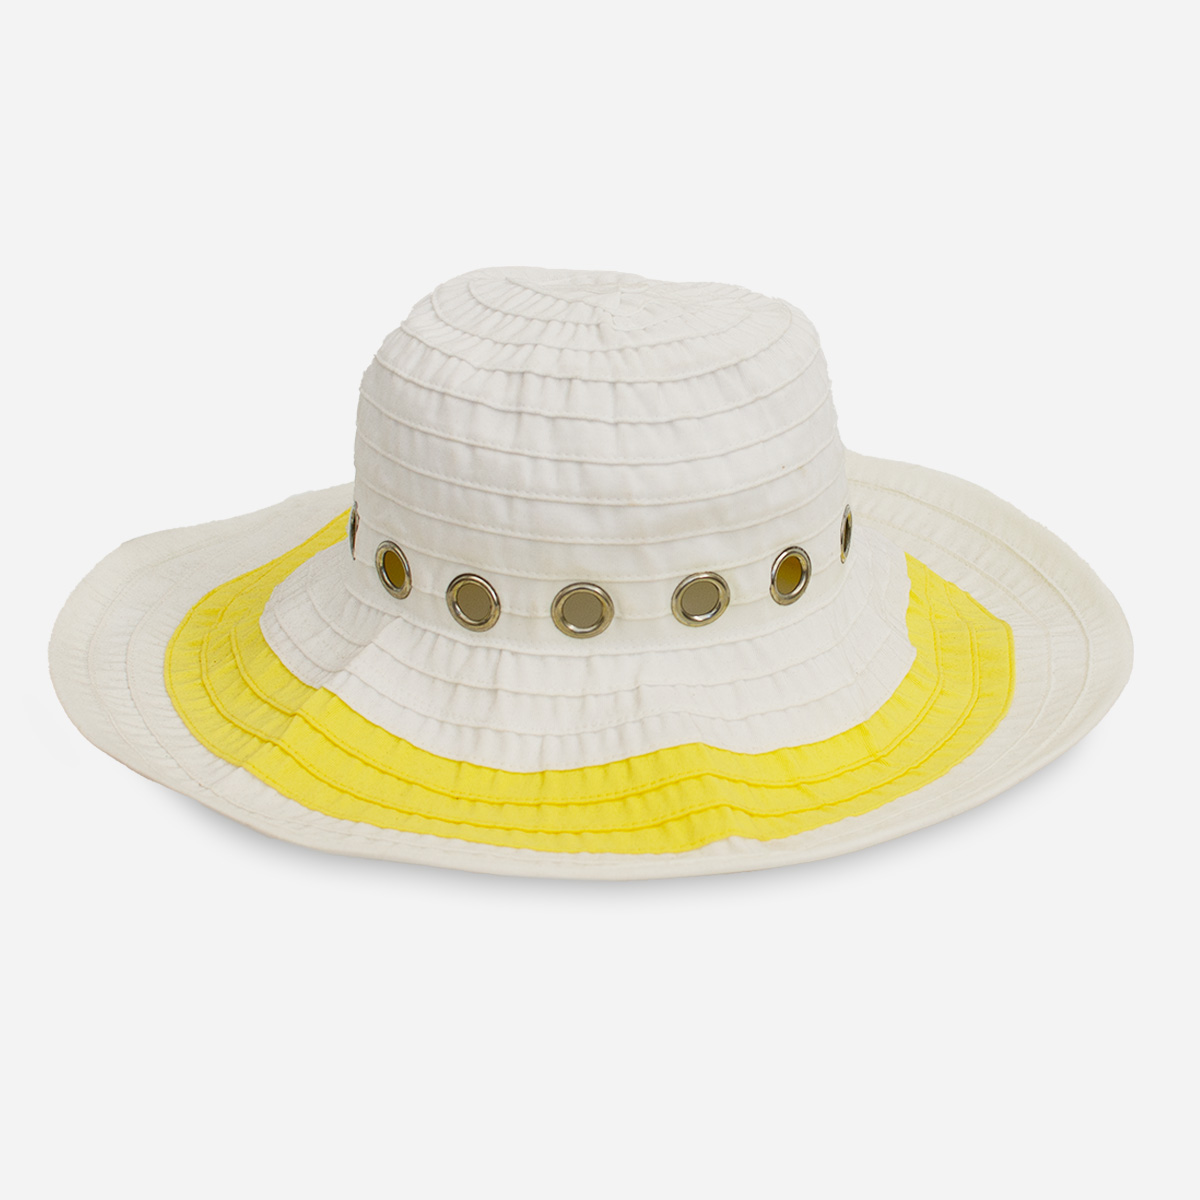 yellow sun hat